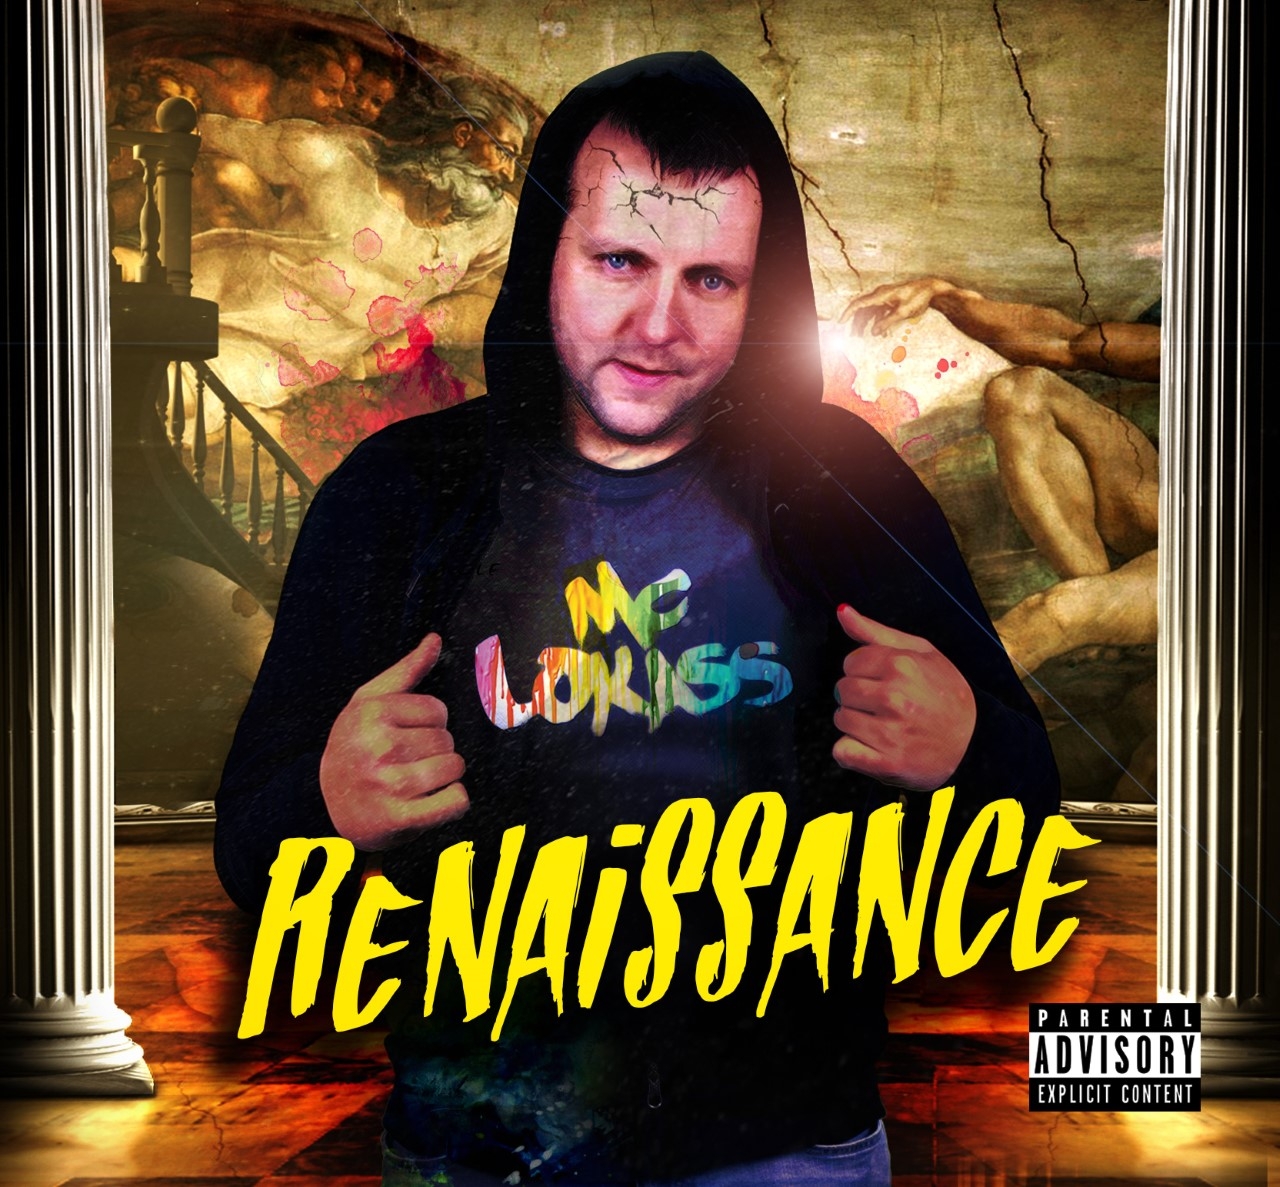 Album Cd "Mc Lokass -Renaissance" de sur Scredboutique.com